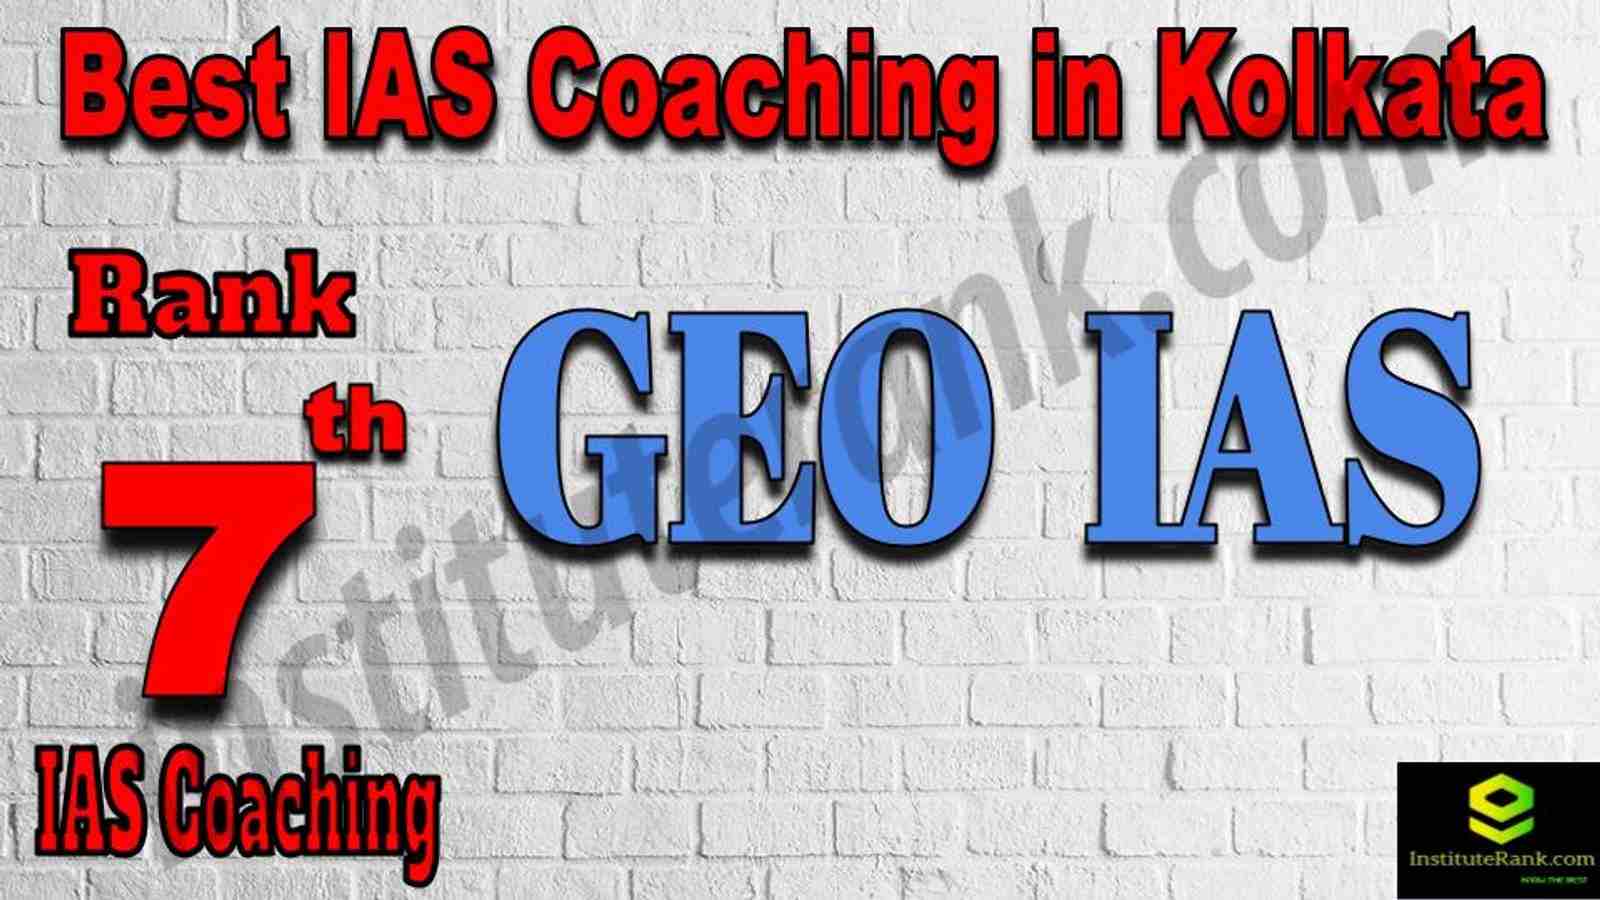 7th Best IAS Coaching in Kolkata